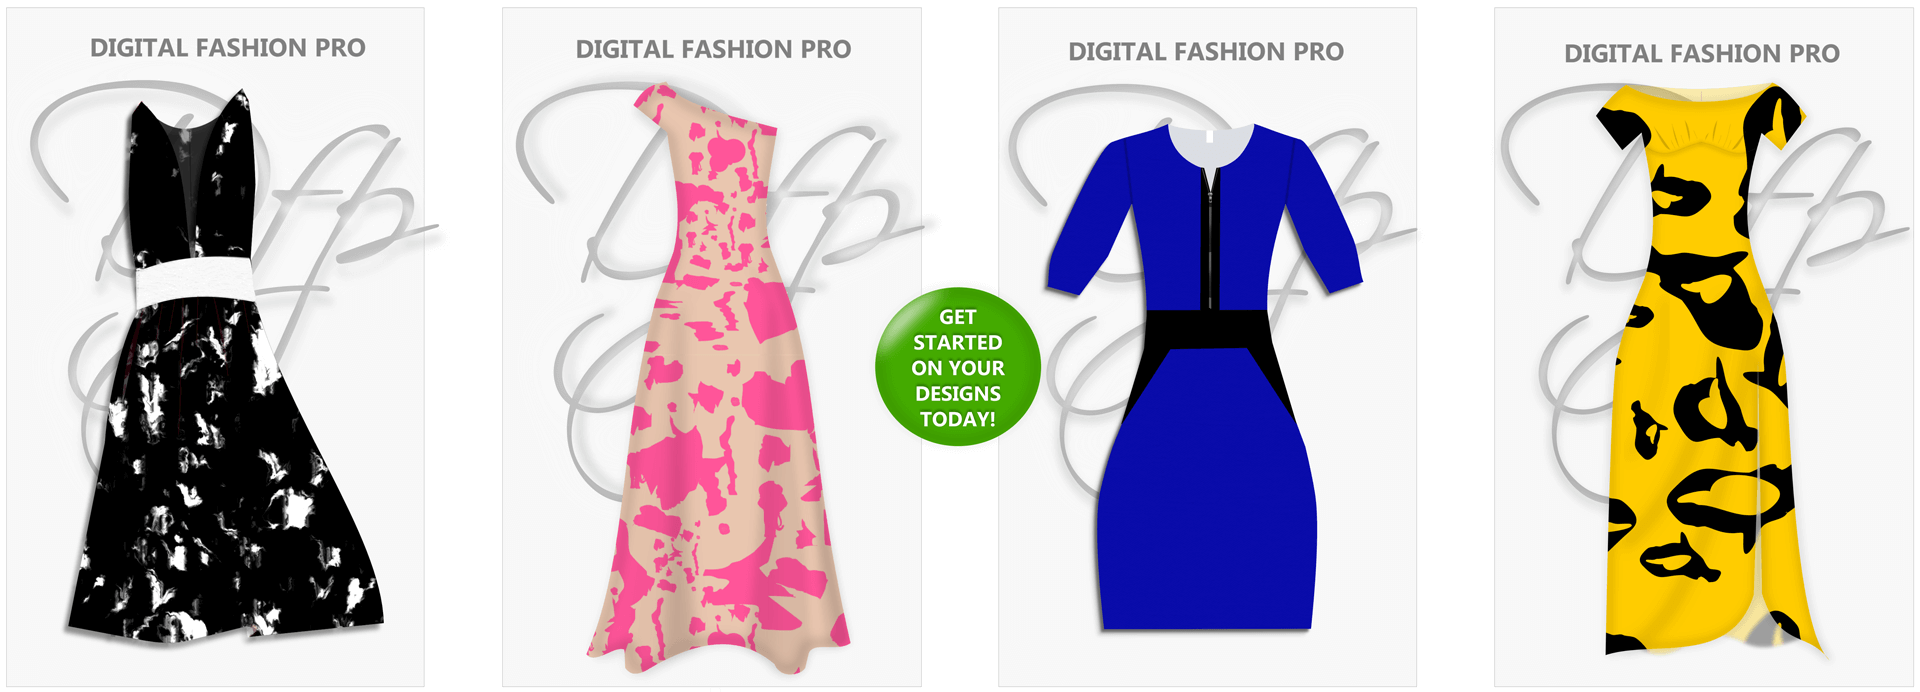 Fashion Design Software - Design Clothing - Start a clothing line - Digital Fashion Pro